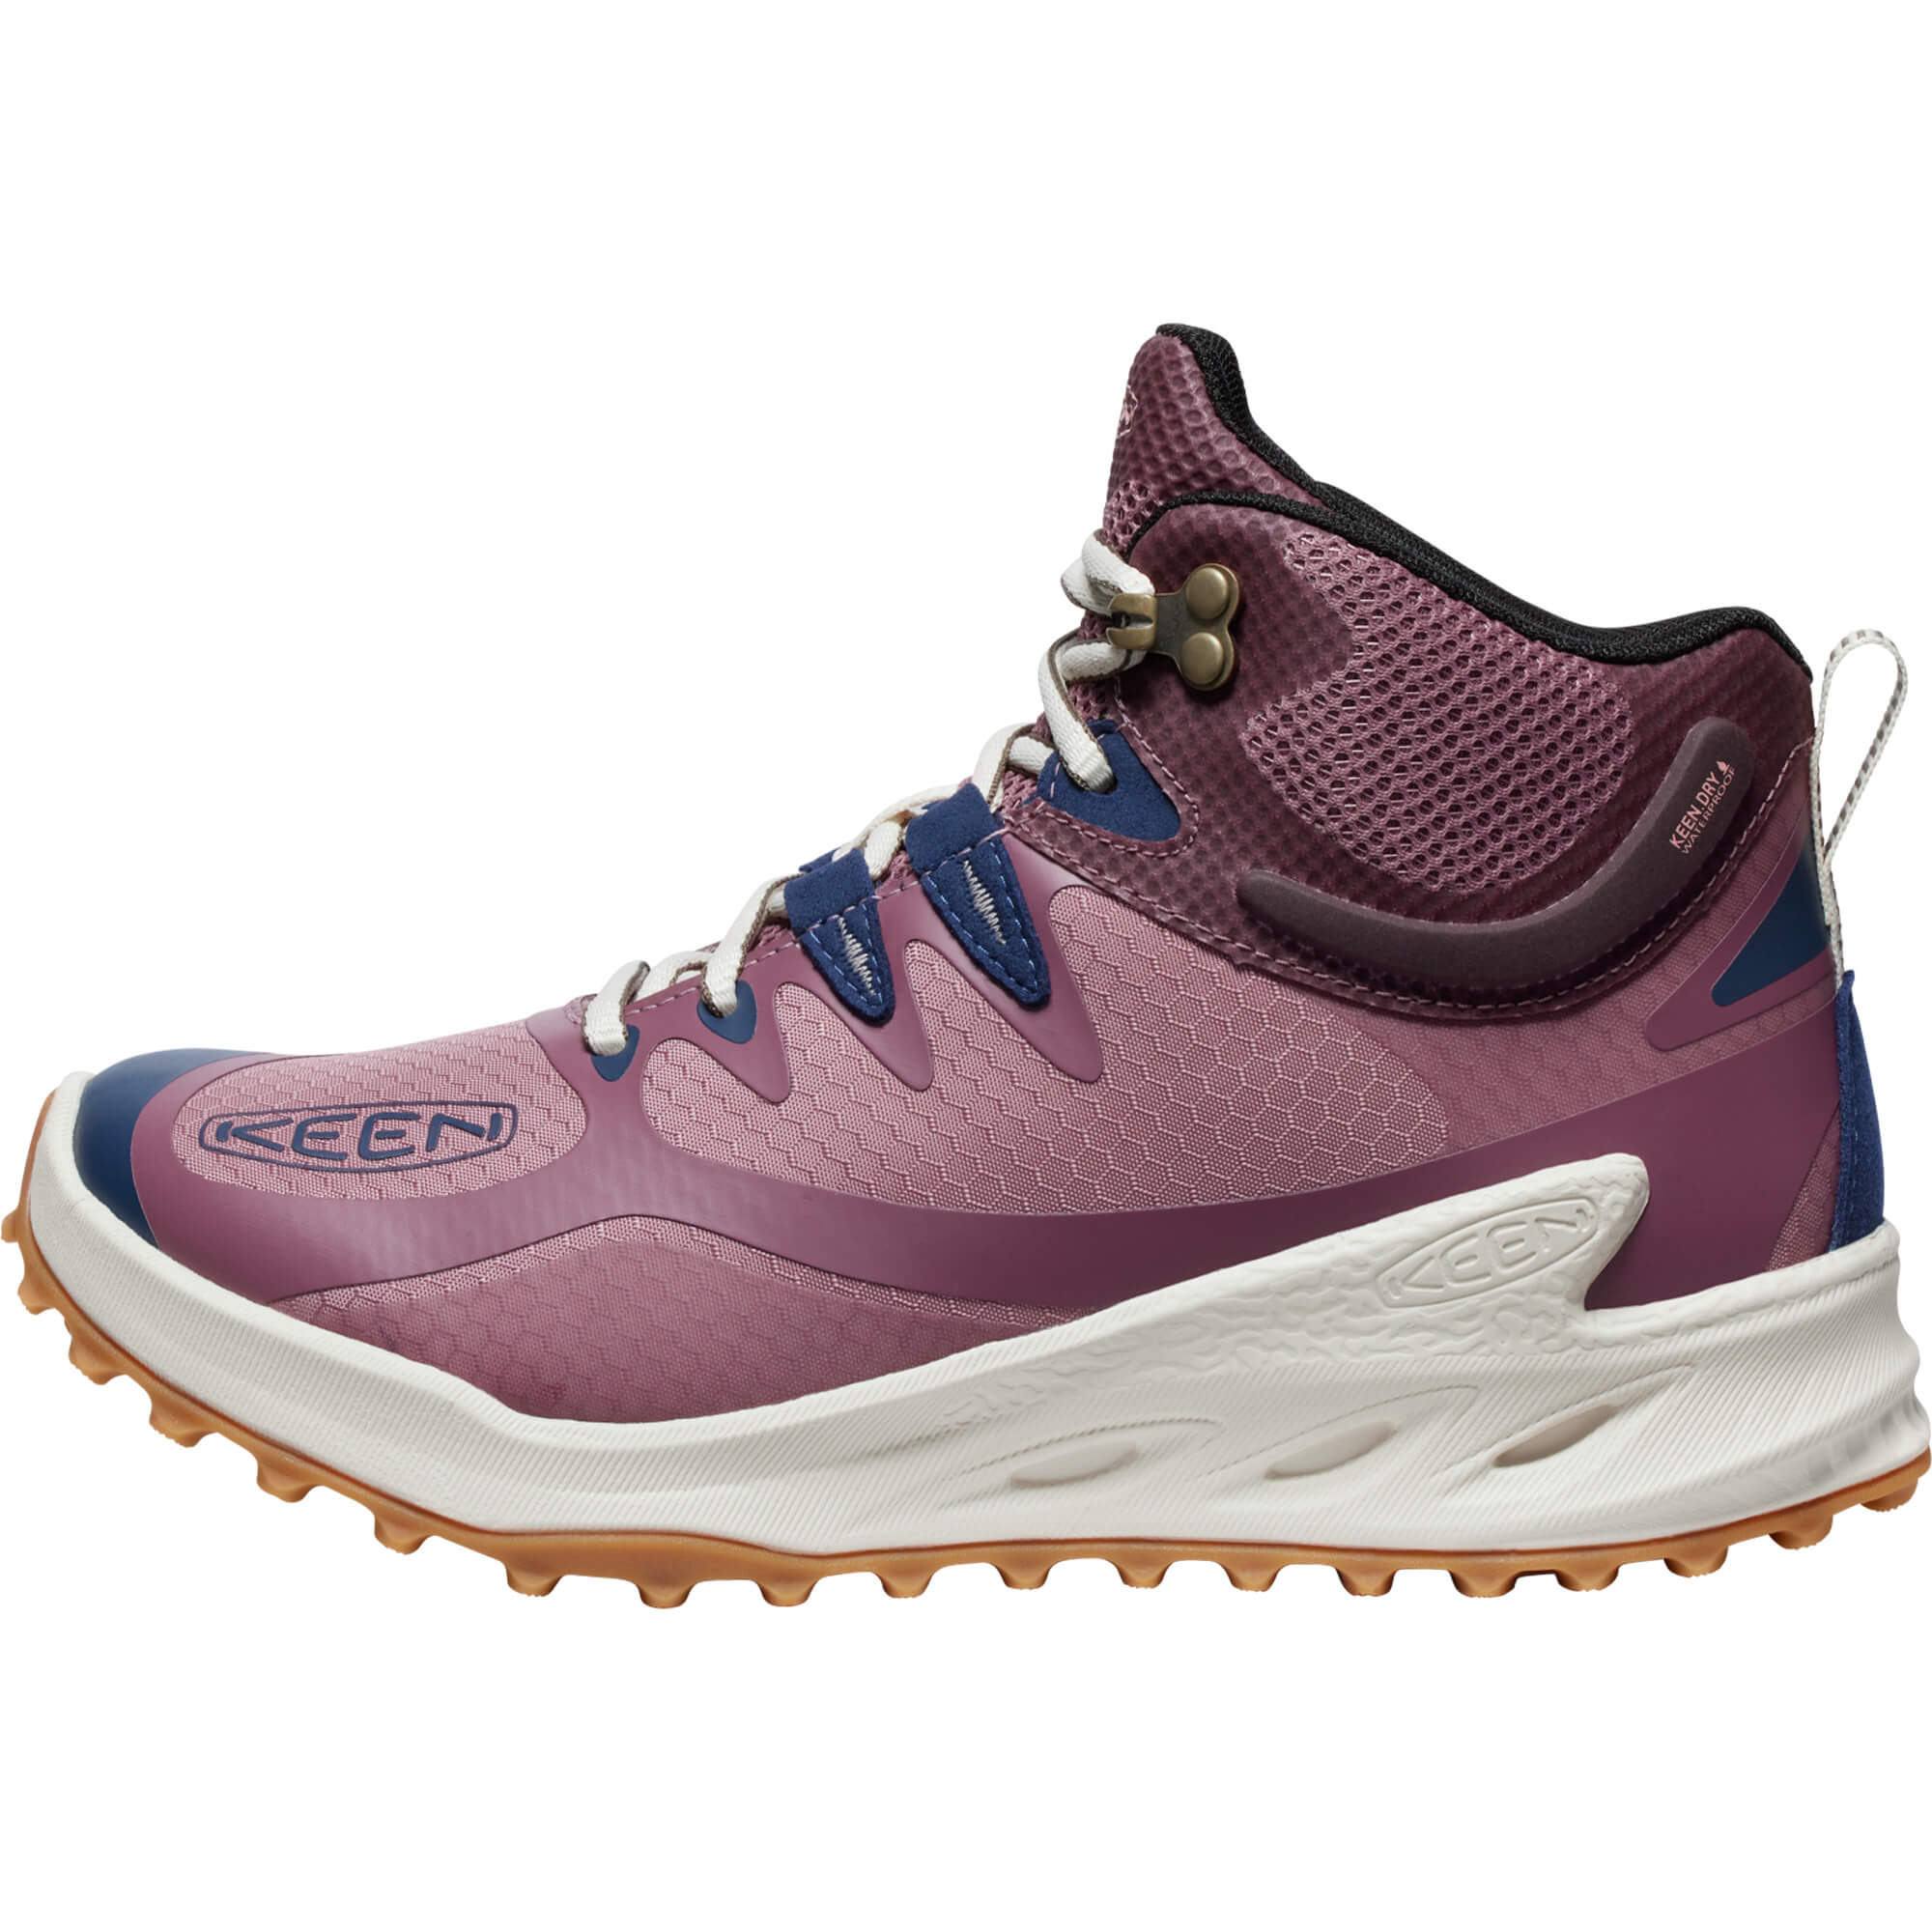 Keen Zionic Mid Waterproof Women's Hiking Boots